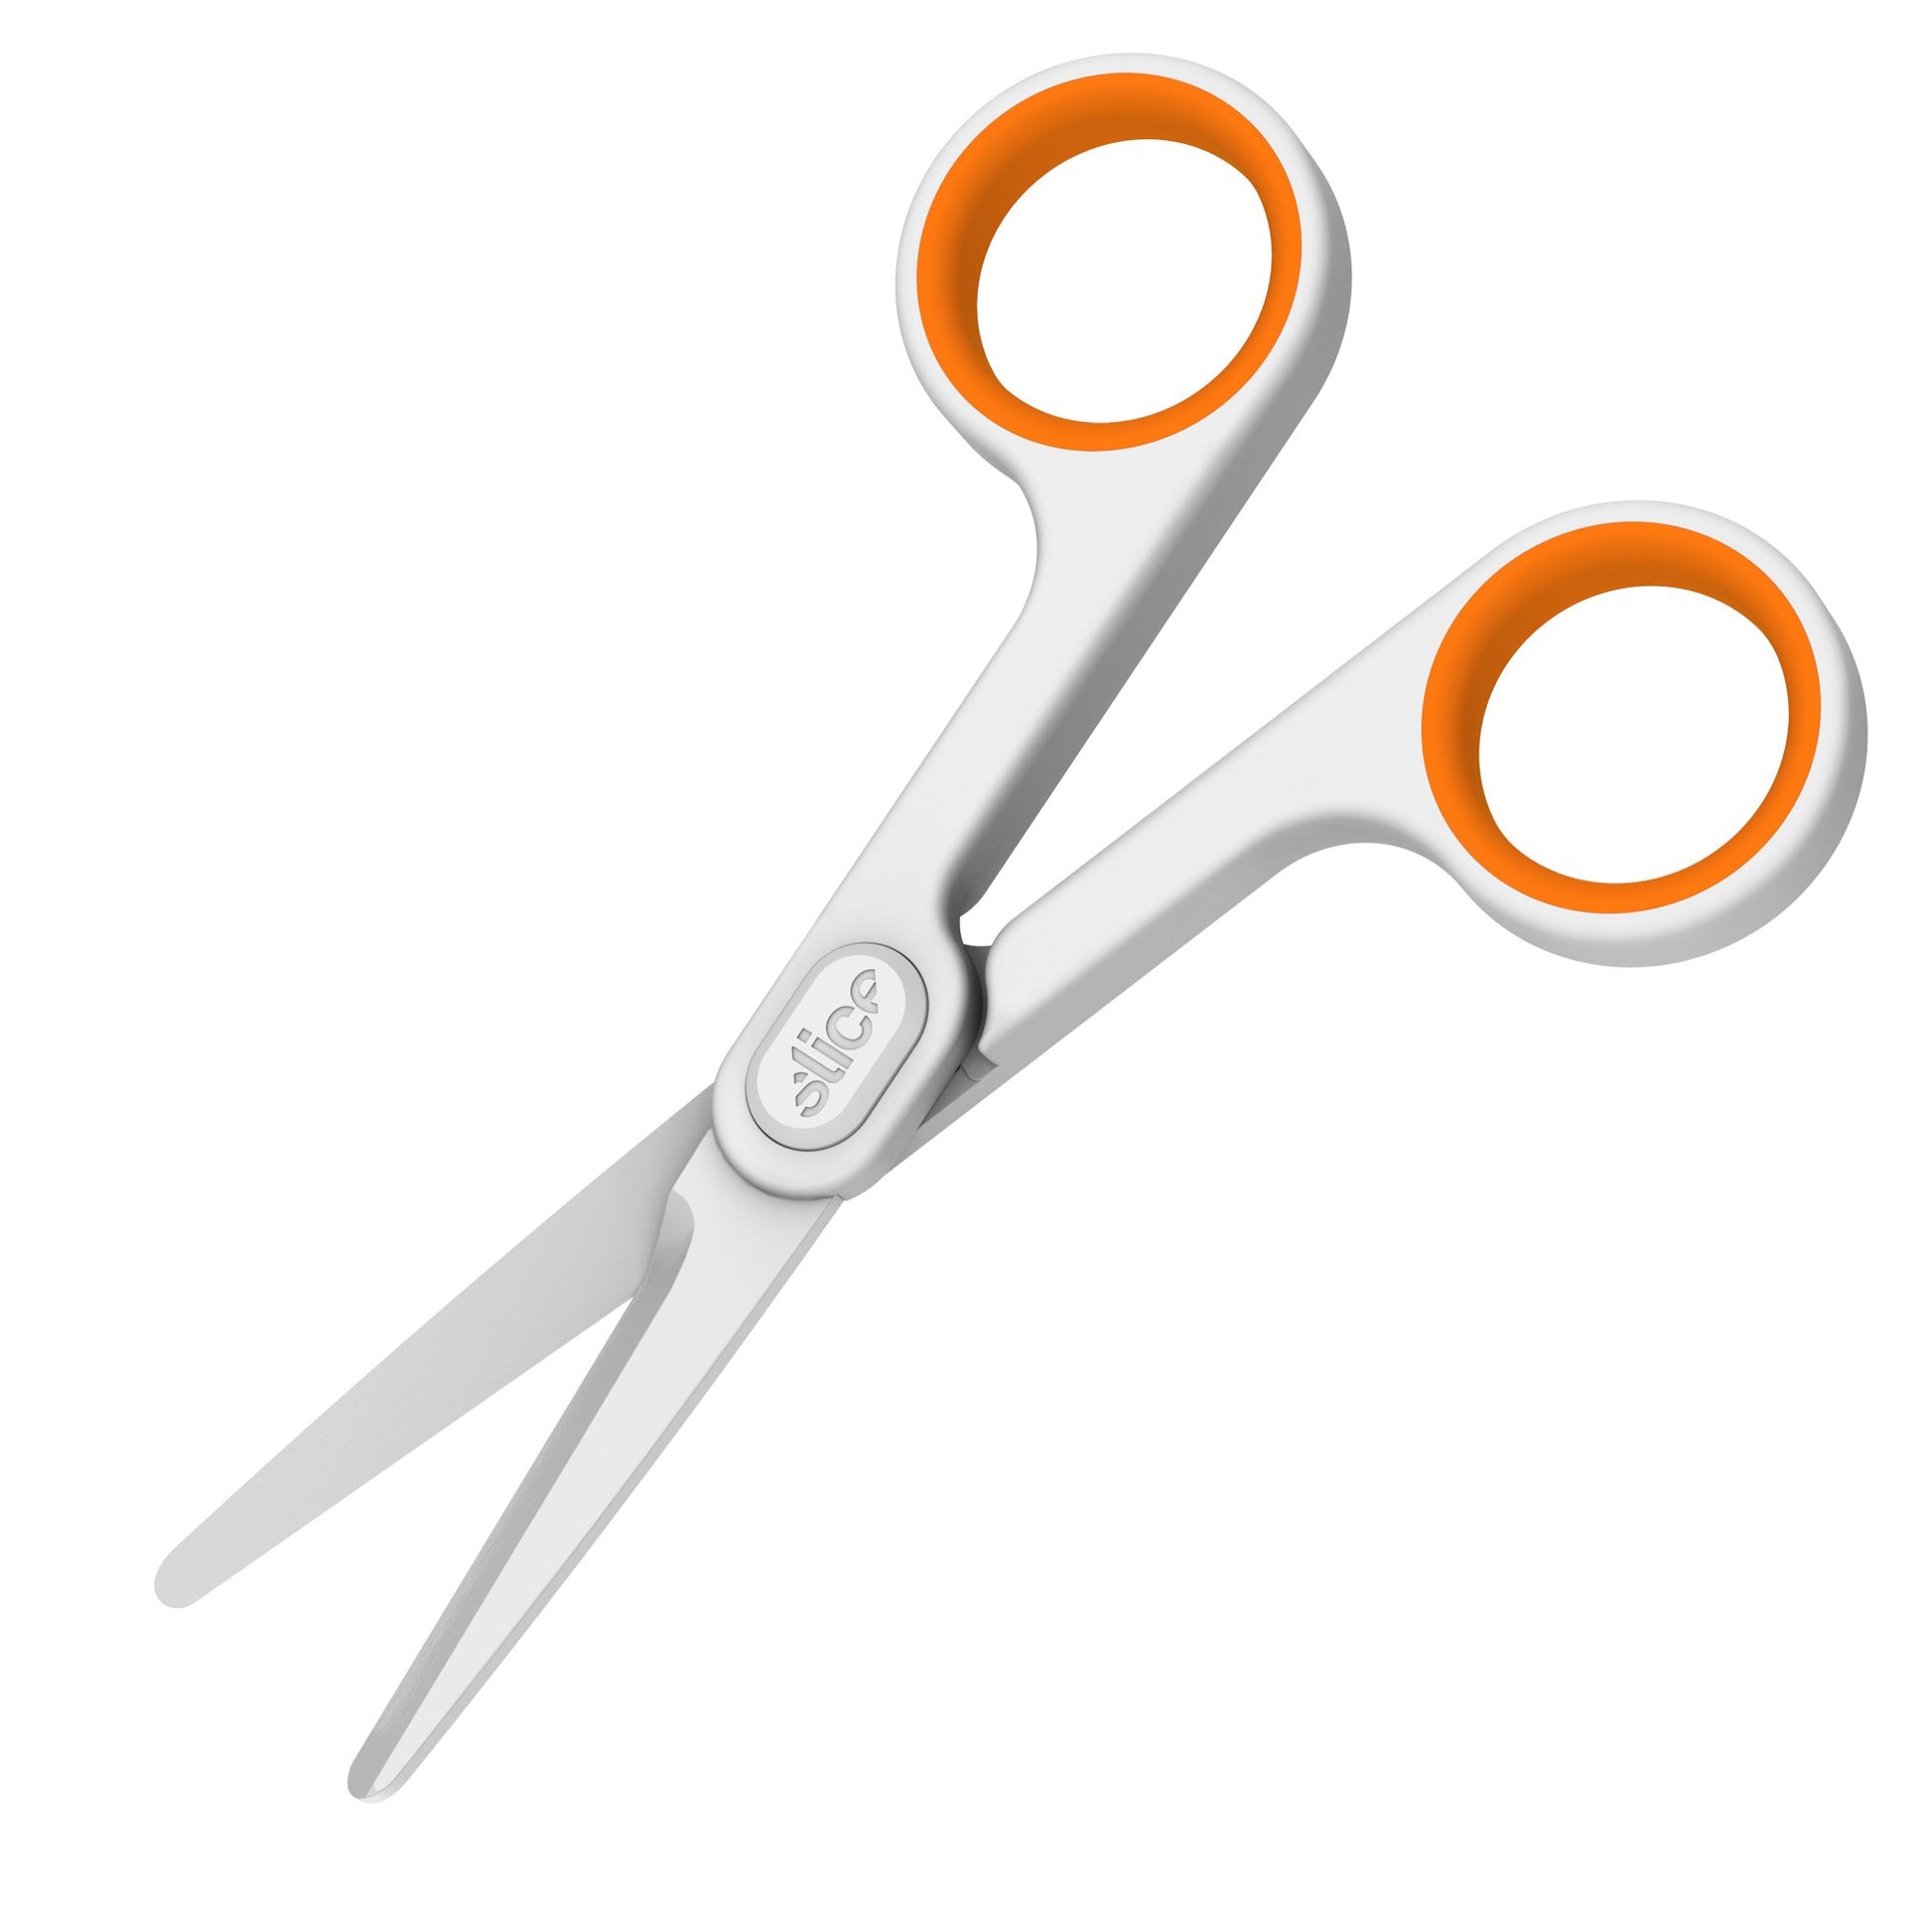 Slice 10544 Small Scissors - Ceramic Blade